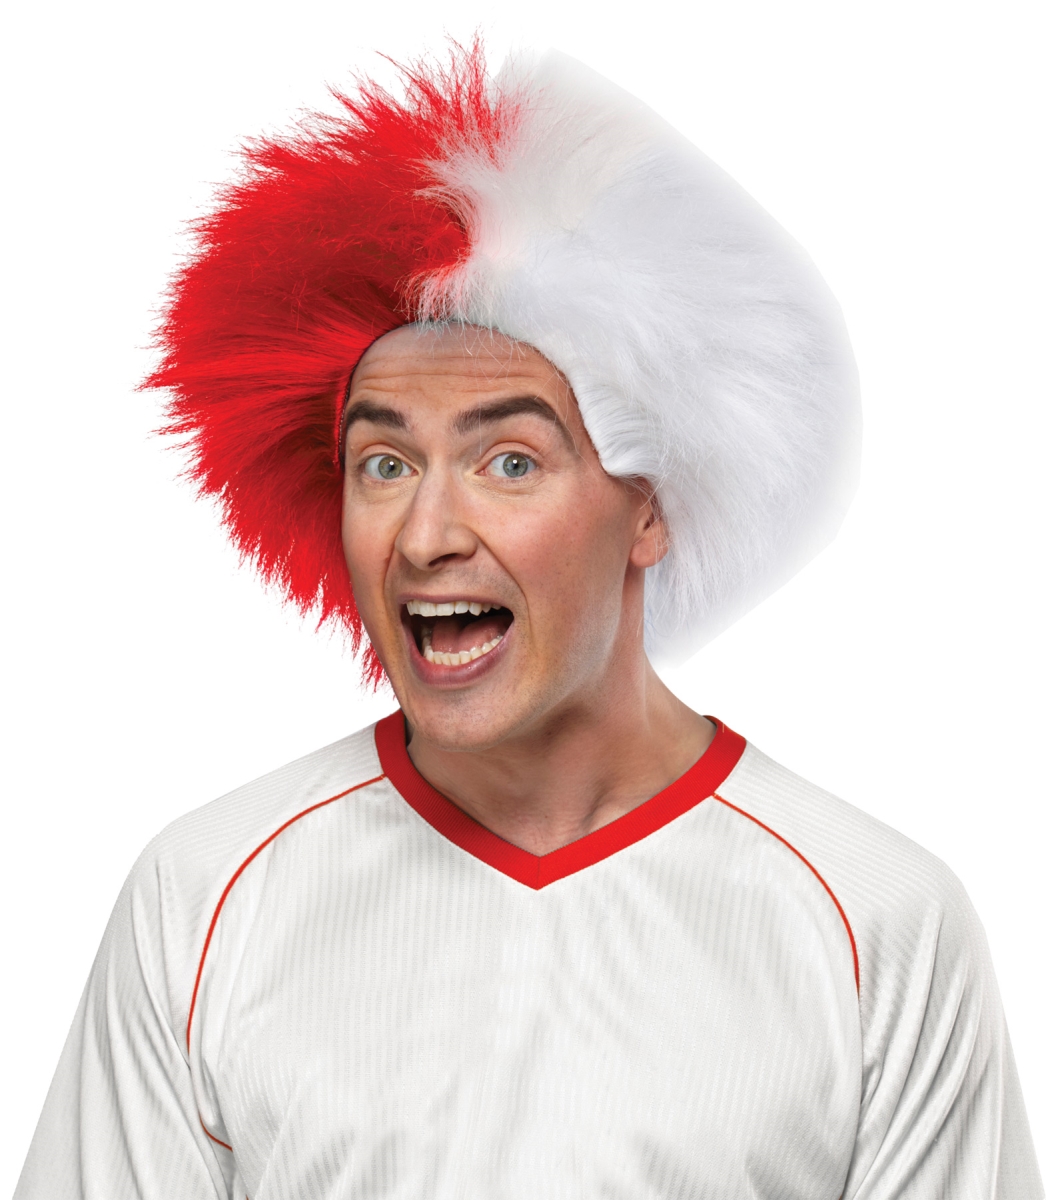 Morris Costumes MR179582 Sports Fun Red & White Wig Costume